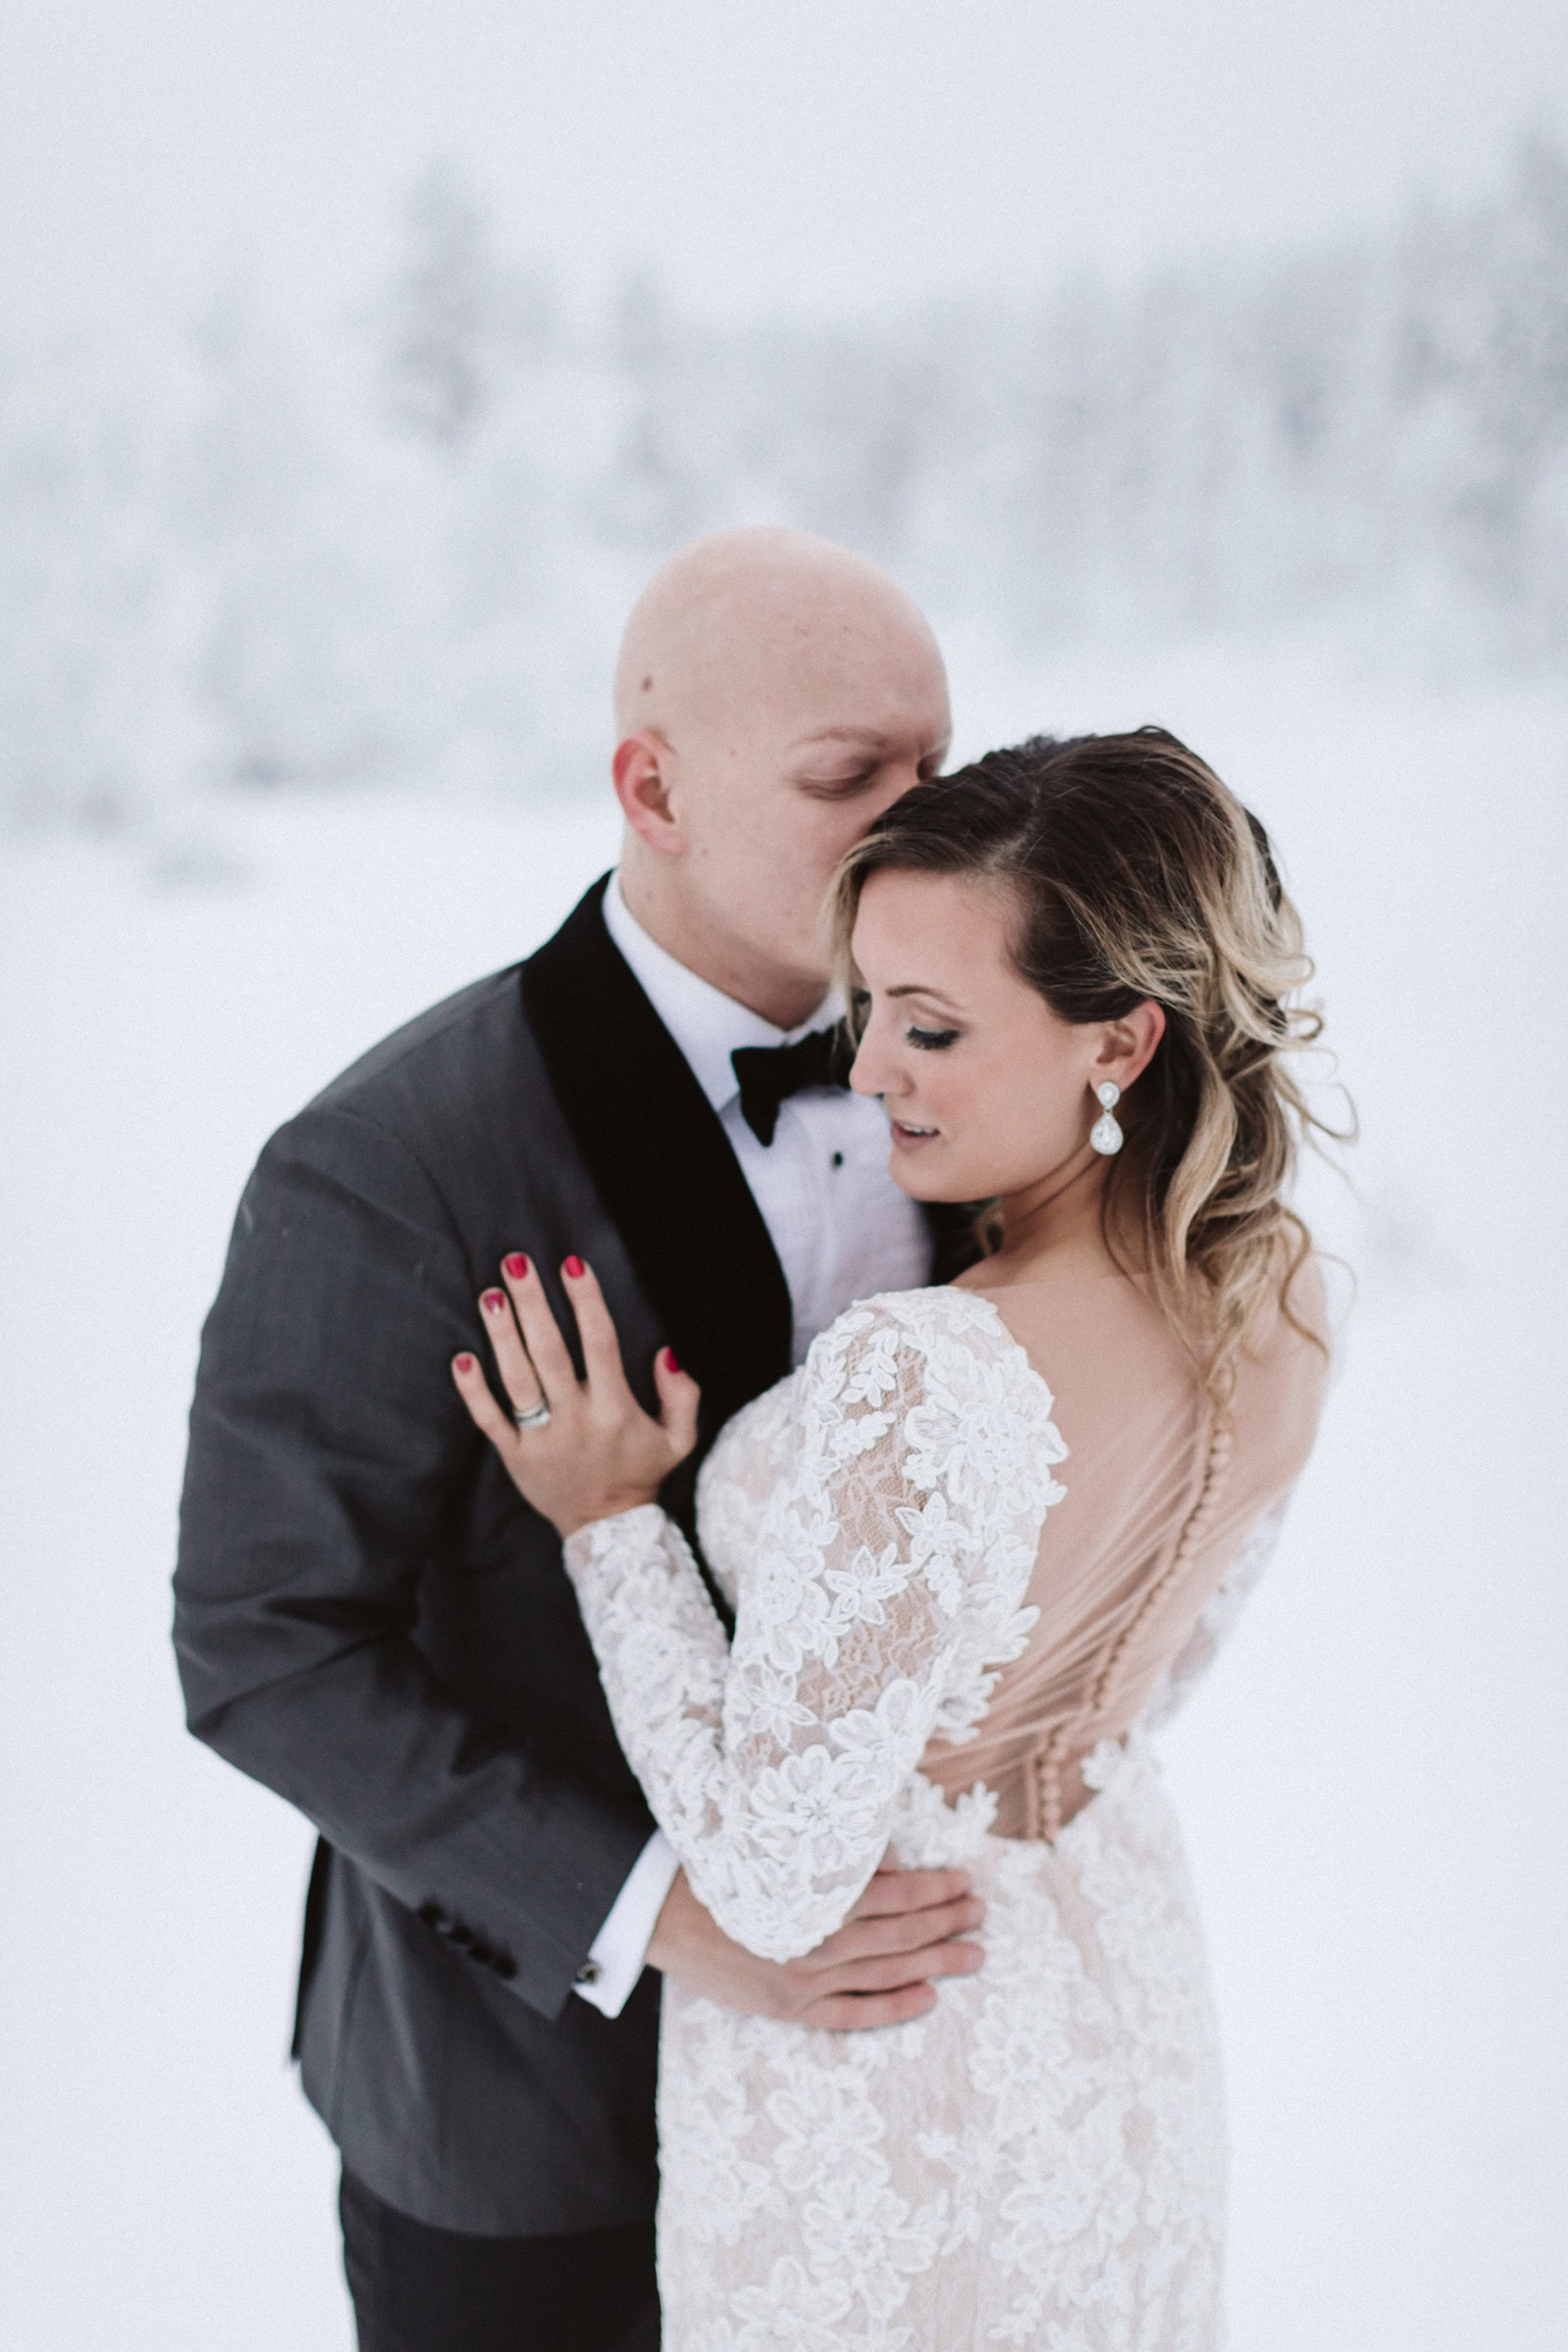 Lapland wedding photographer